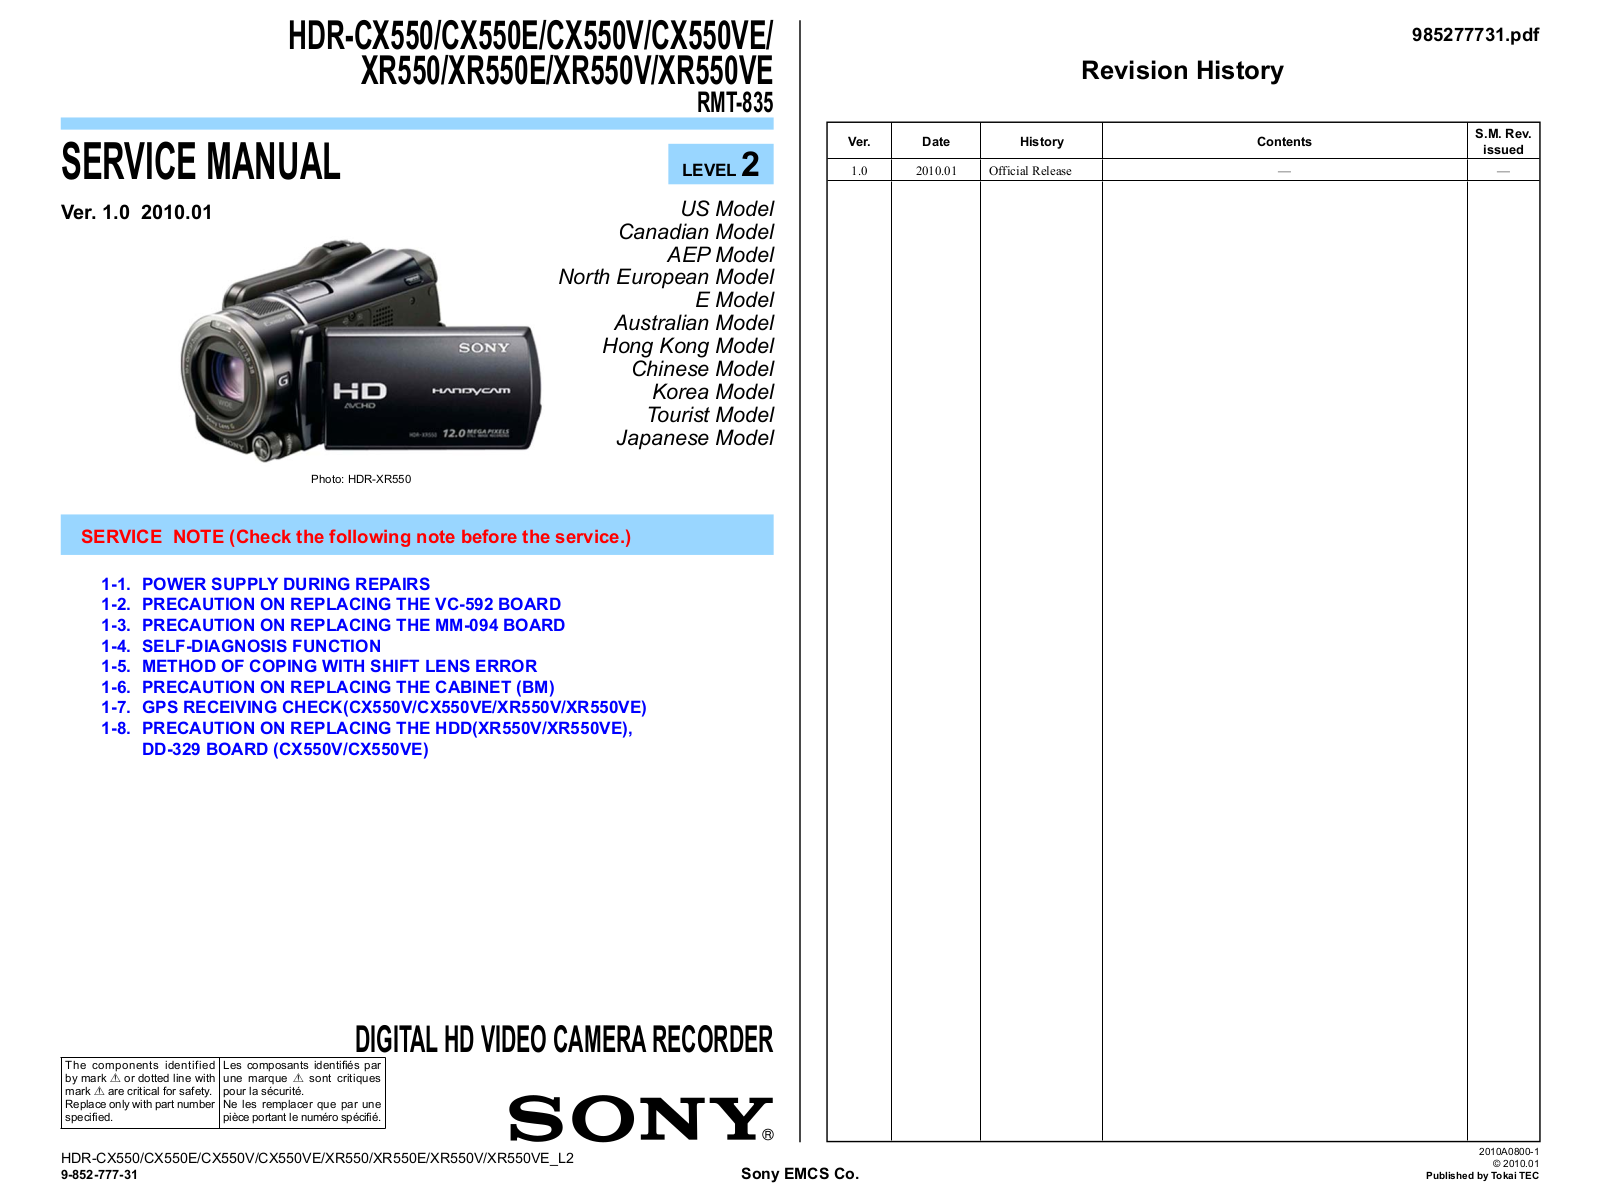 Sony HDR-XR550VE, HDR-XR550V, HDR-XR550, HDR-XR550E, HDR-CX550VE Service Manual